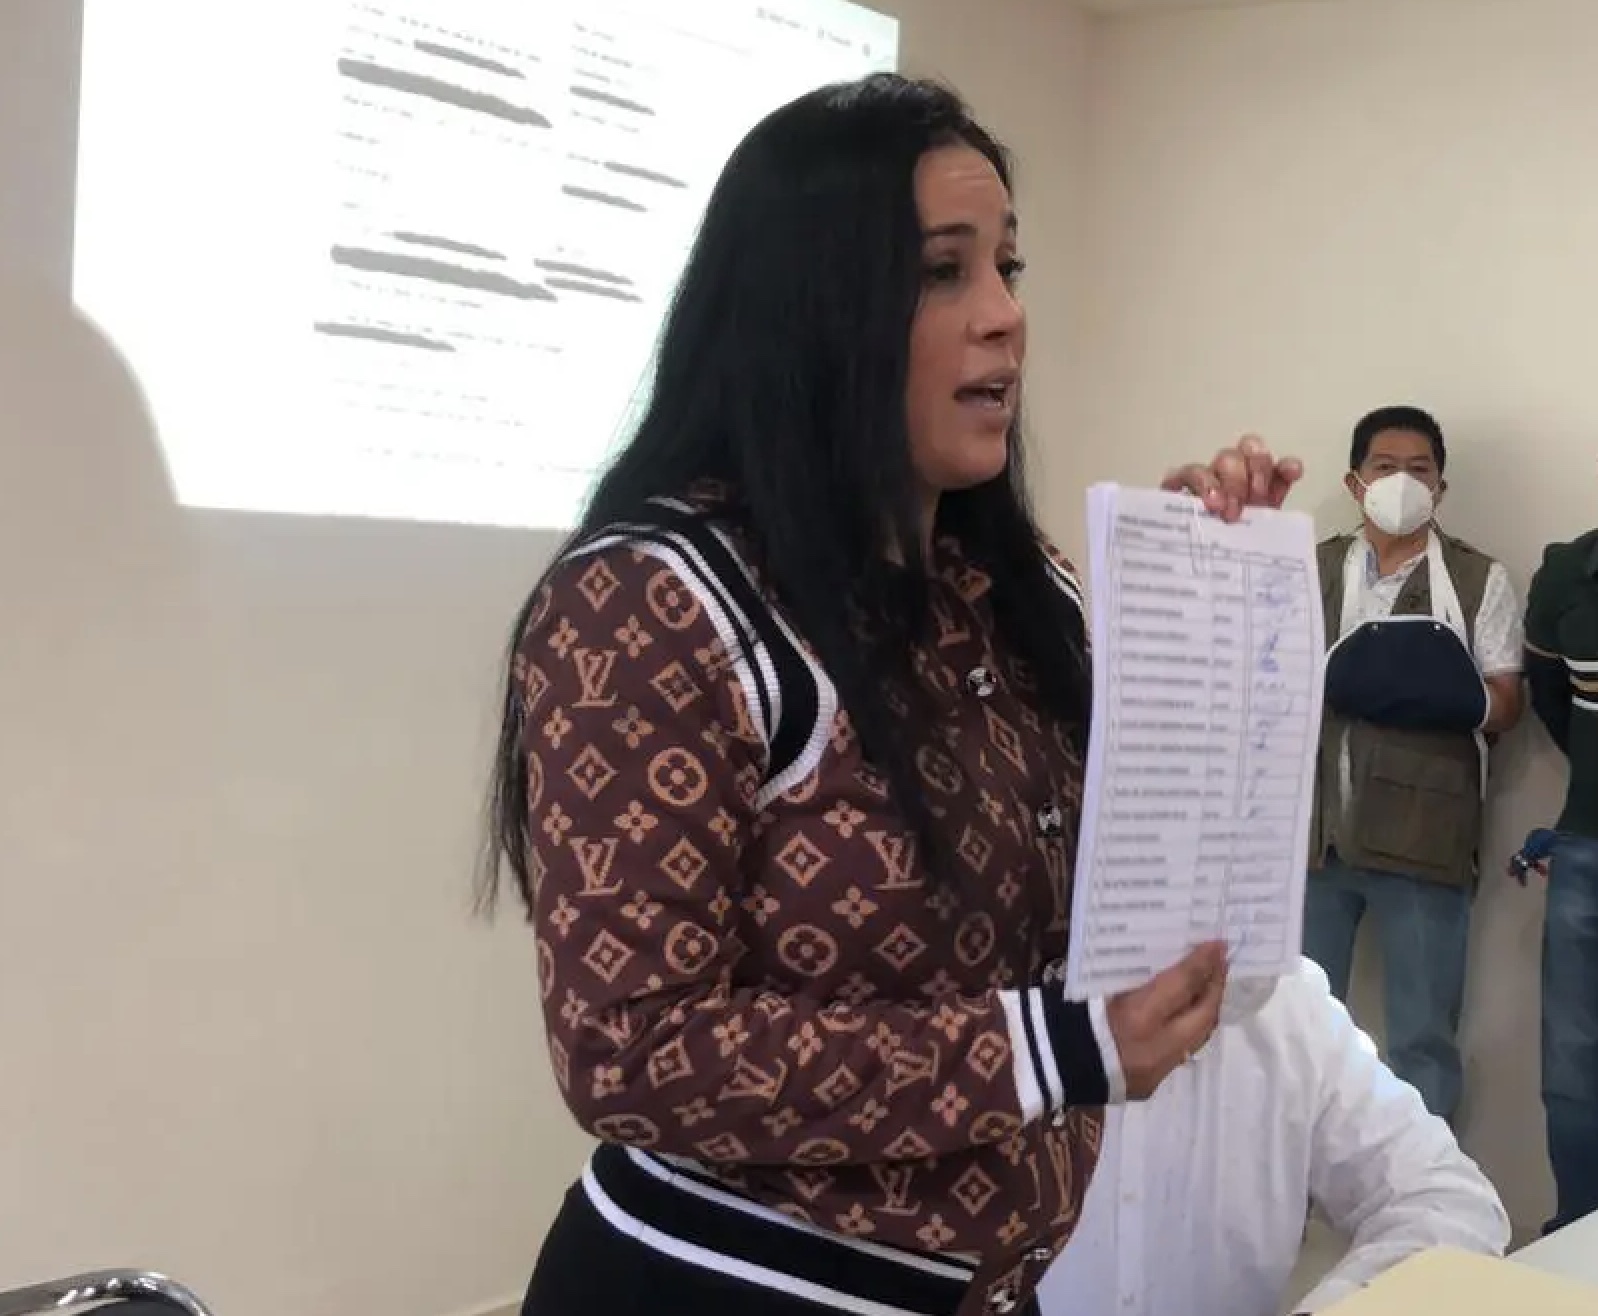 Hermana de Diana Sánchez Barrios "hereda" candidatura